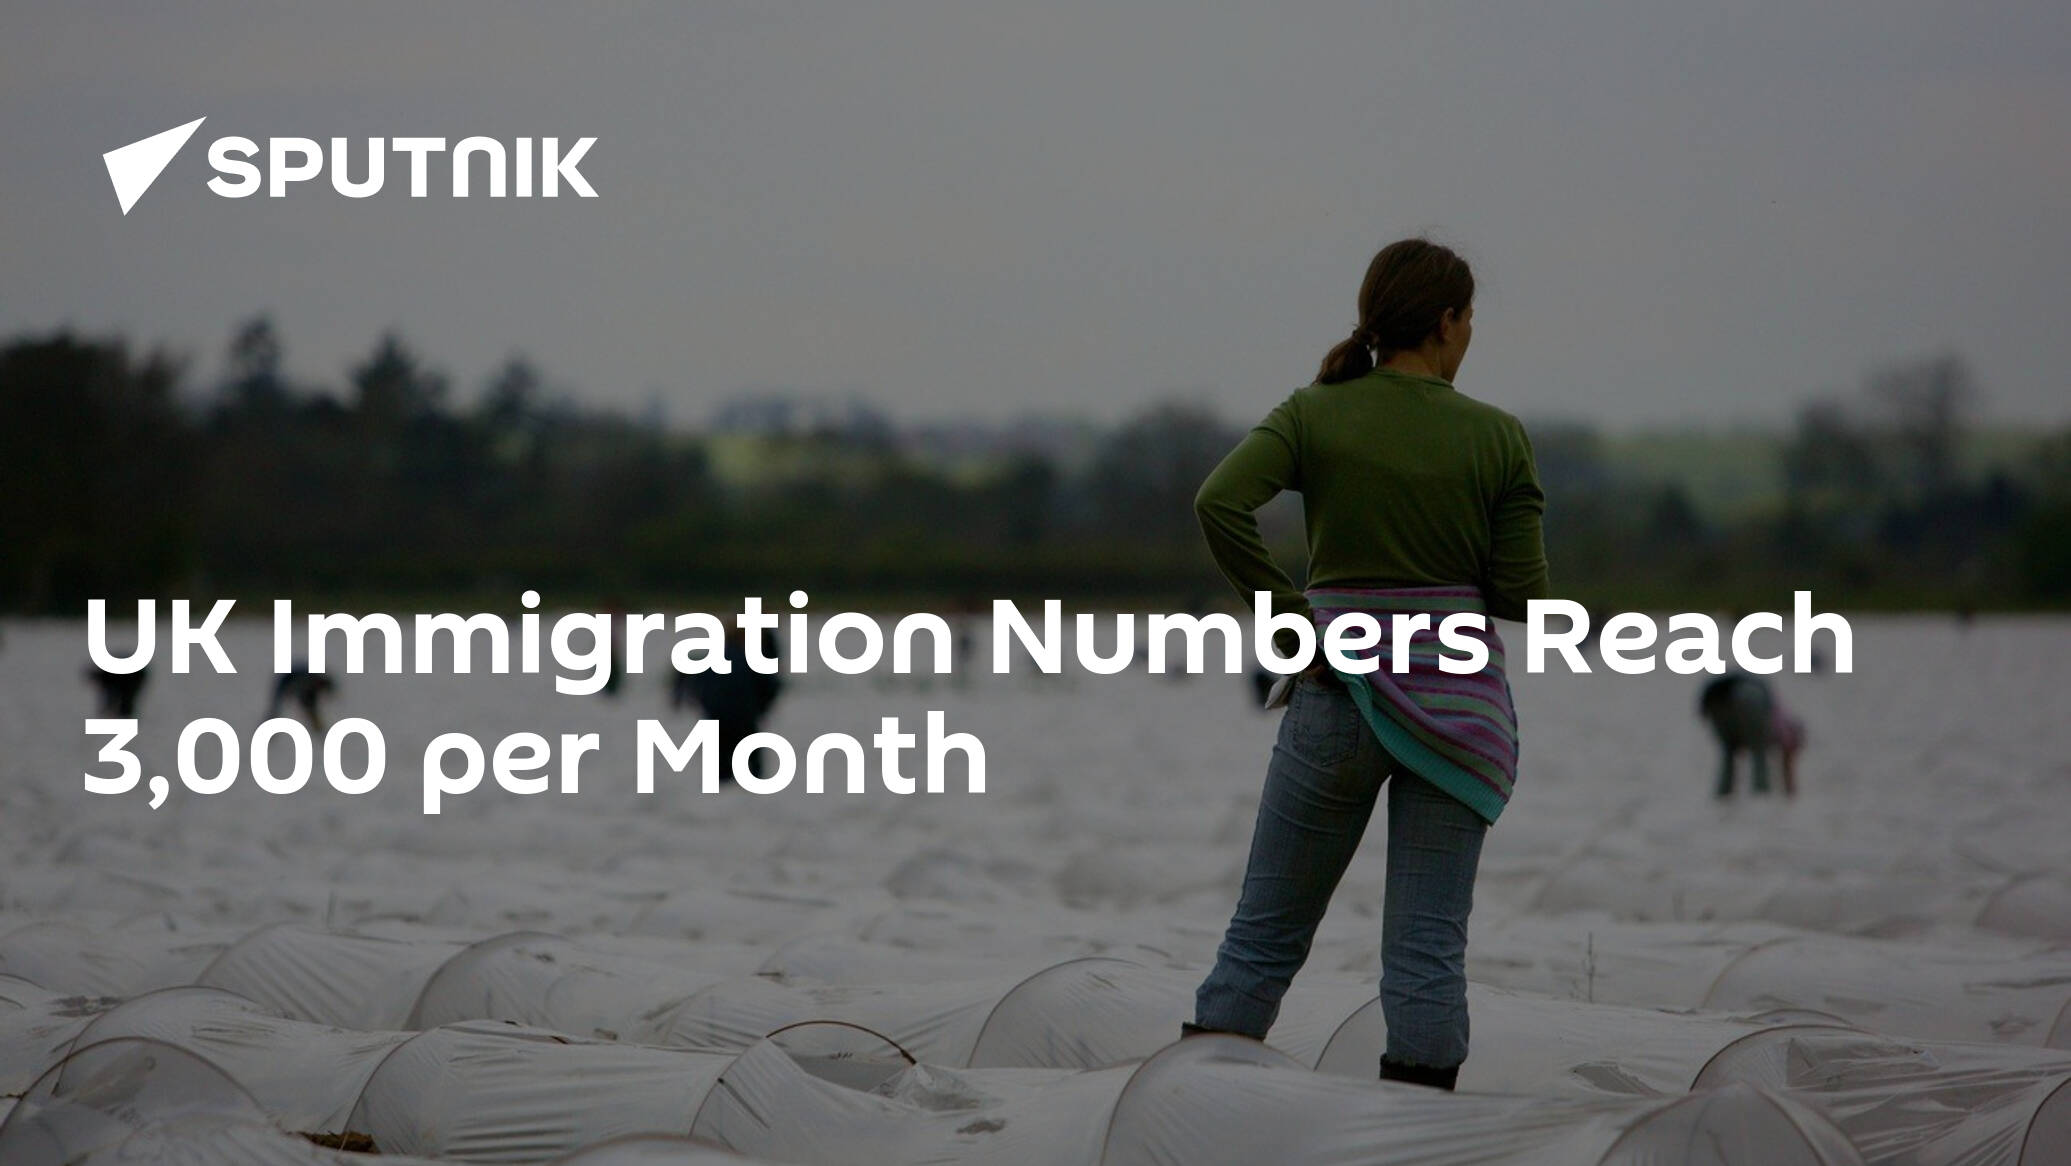 UK Immigration Numbers Reach 3,000 per Month 19.12.2014, Sputnik